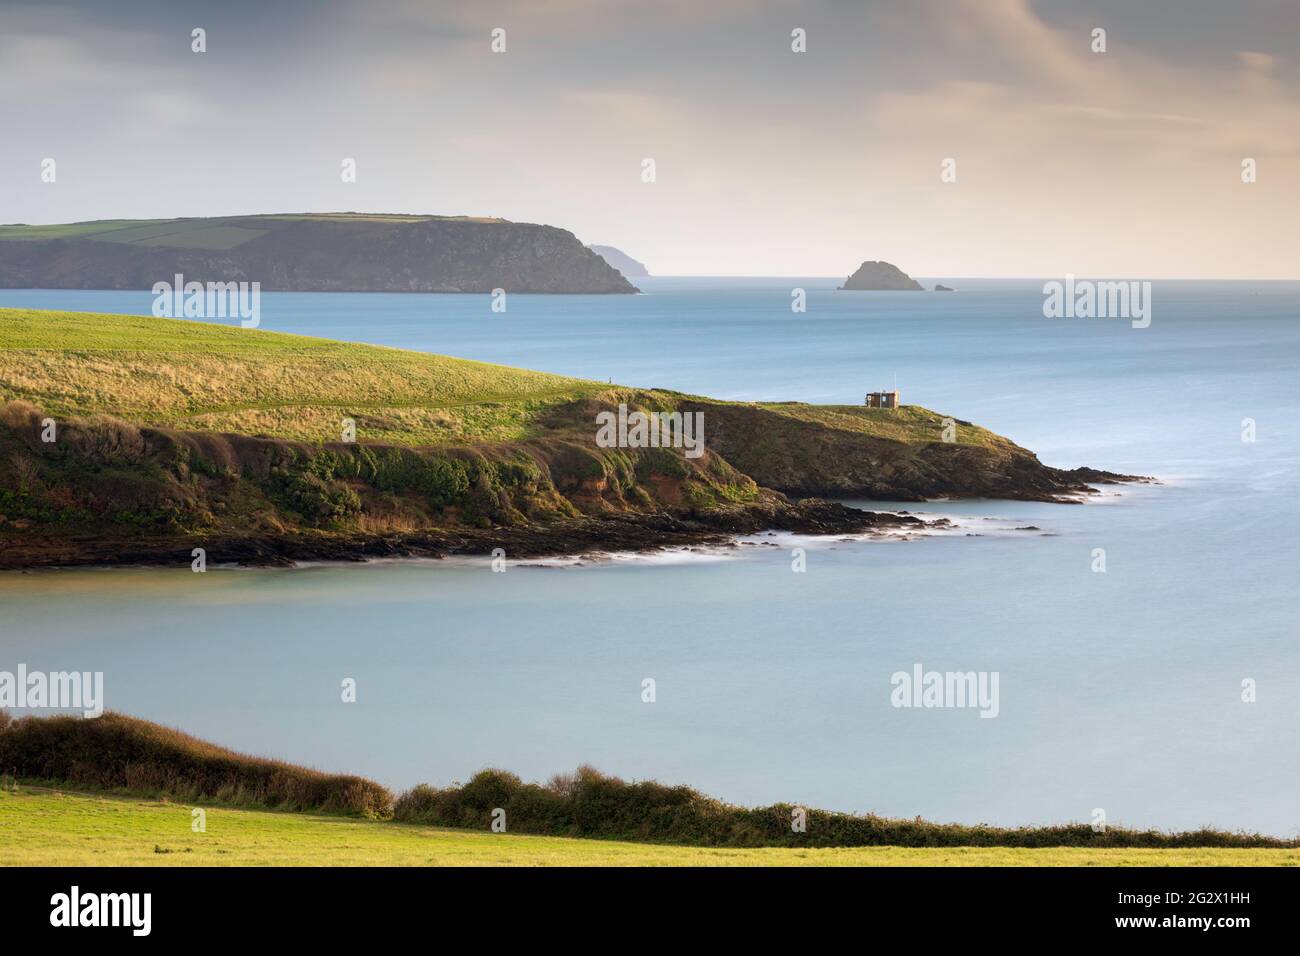 The view towards Nare Head on Cornwall's Roseland Peninsula. Stock Photo